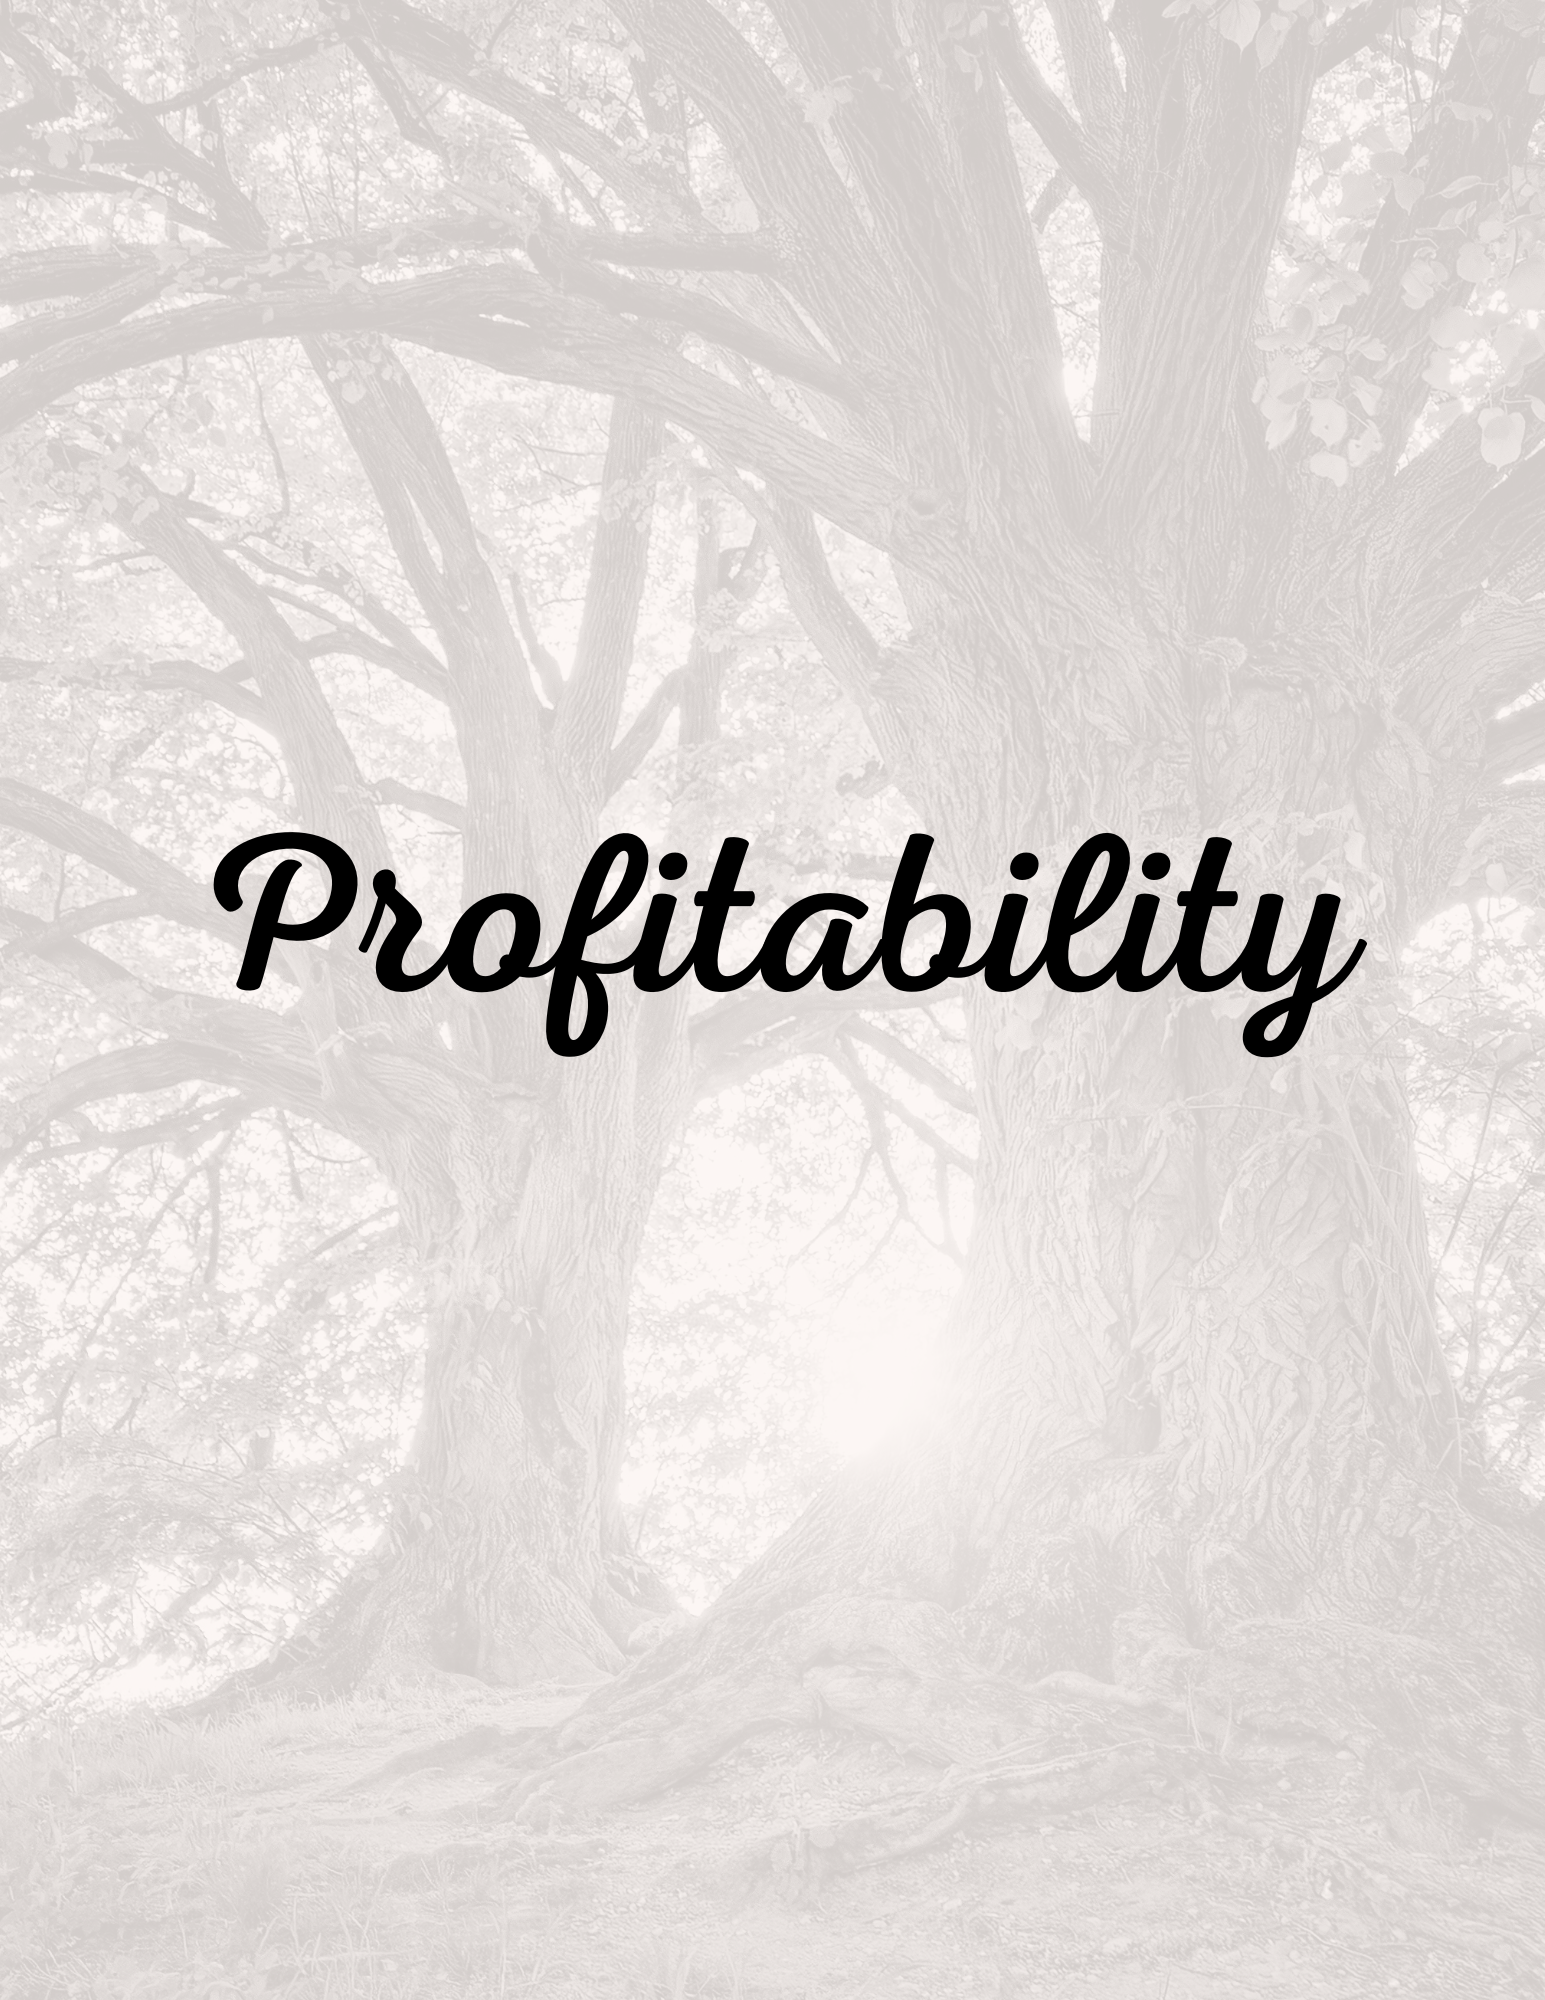 Profitability